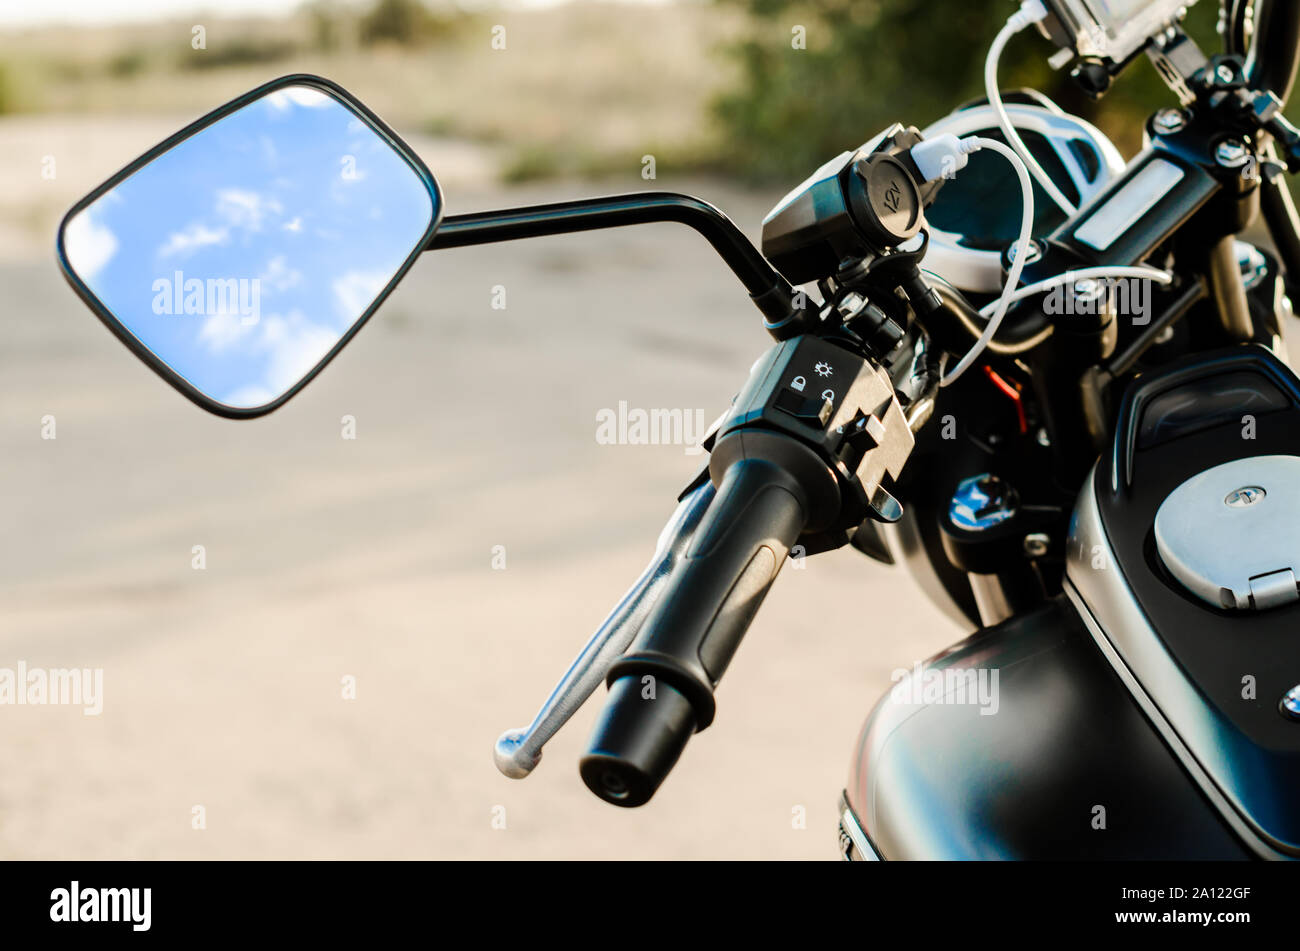 Reflexion der Nab und Wolken im Motorrad Spiegel, Motorrad Lenkrad und  Motorrad Kraftstofftank Stockfotografie - Alamy